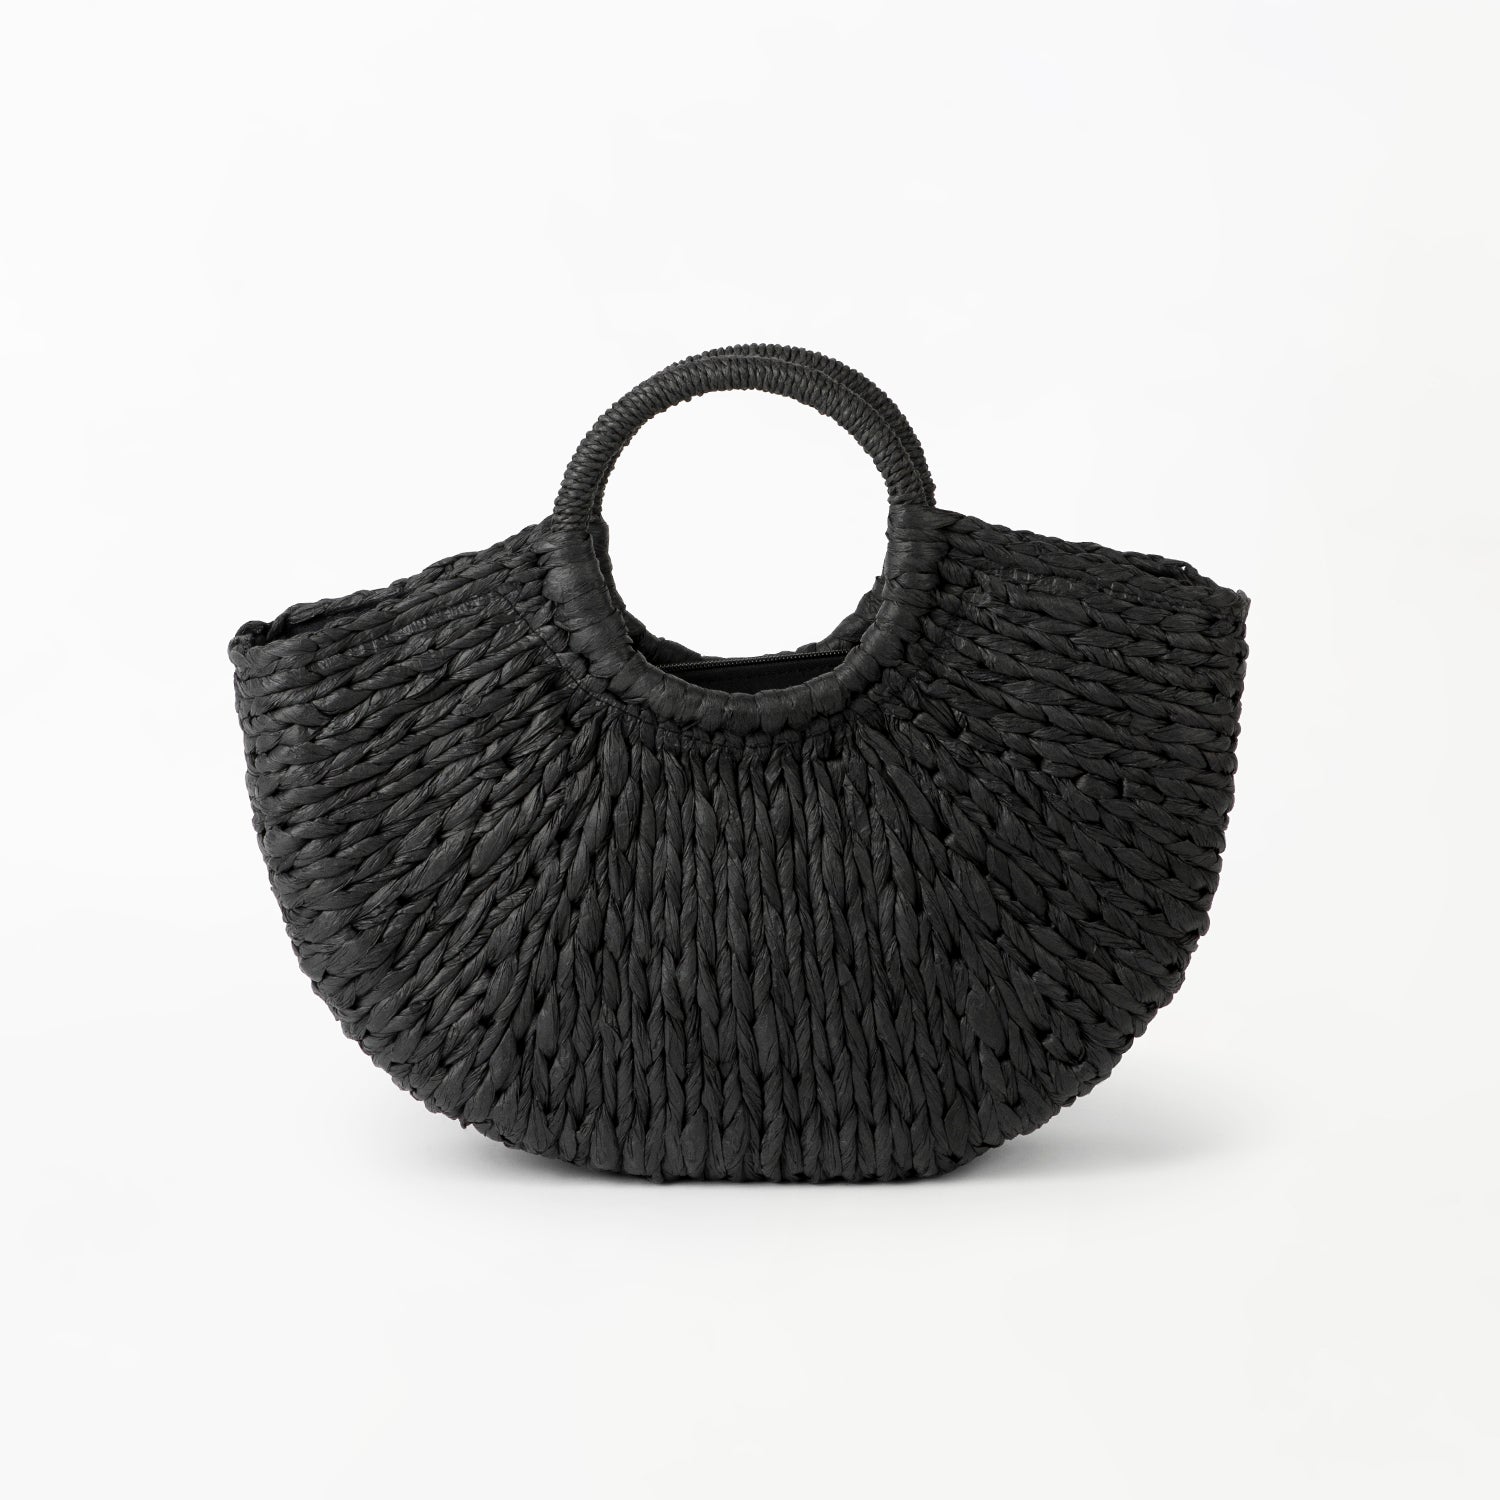 Stylish Woven Handbag | Natural Woven Handbag in Black - Basketly NZ